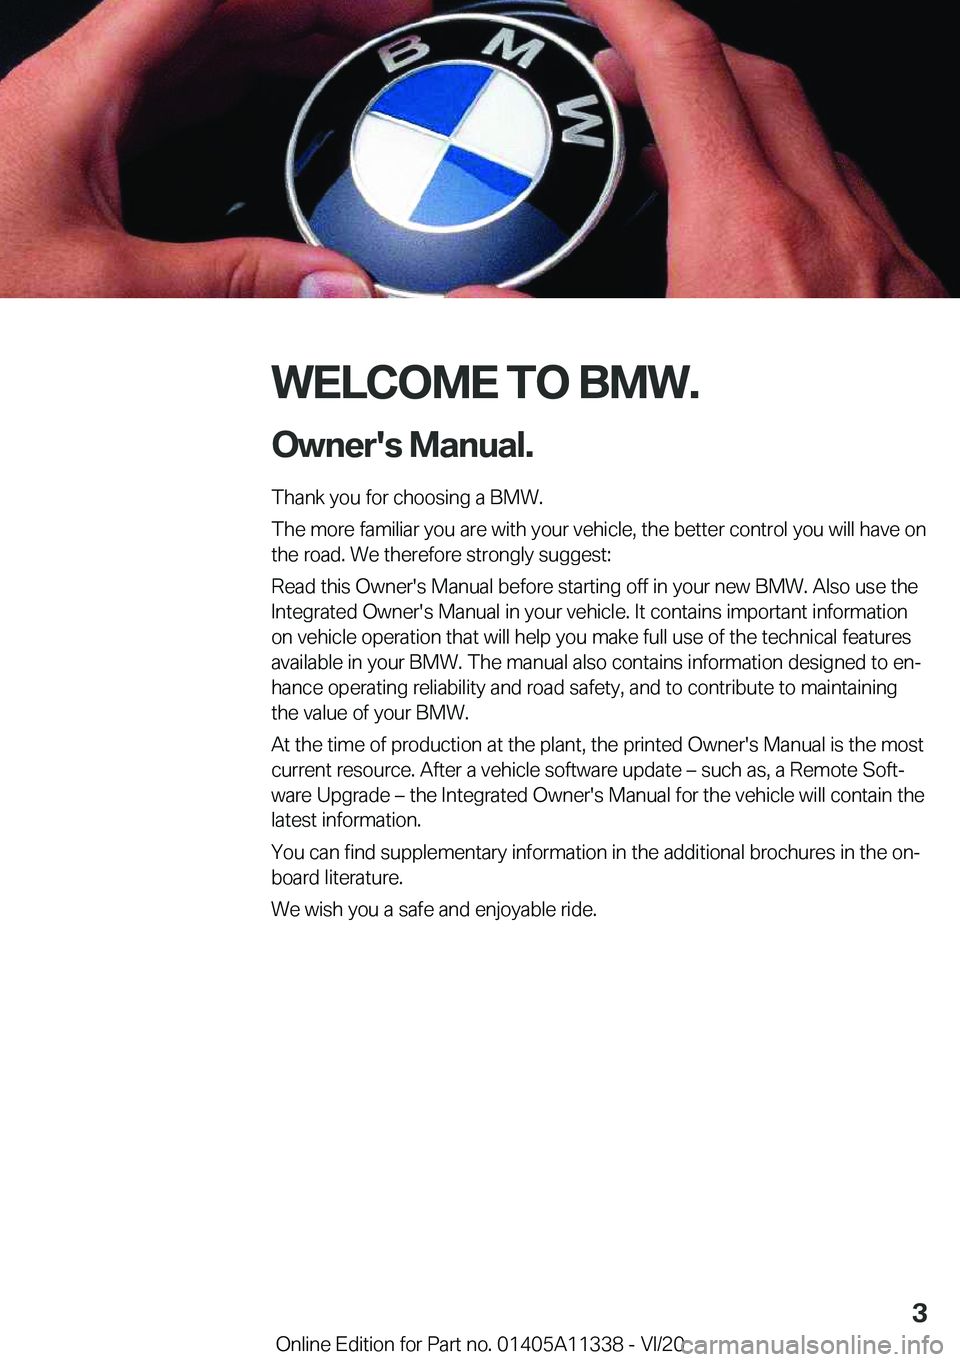 BMW 5 SERIES 2021  Owners Manual �W�E�L�C�O�M�E��T�O��B�M�W�.�O�w�n�e�r�'�s��M�a�n�u�a�l�.
�T�h�a�n�k��y�o�u��f�o�r��c�h�o�o�s�i�n�g��a��B�M�W�.
�T�h�e��m�o�r�e��f�a�m�i�l�i�a�r��y�o�u��a�r�e��w�i�t�h��y�o�u�r��v�e